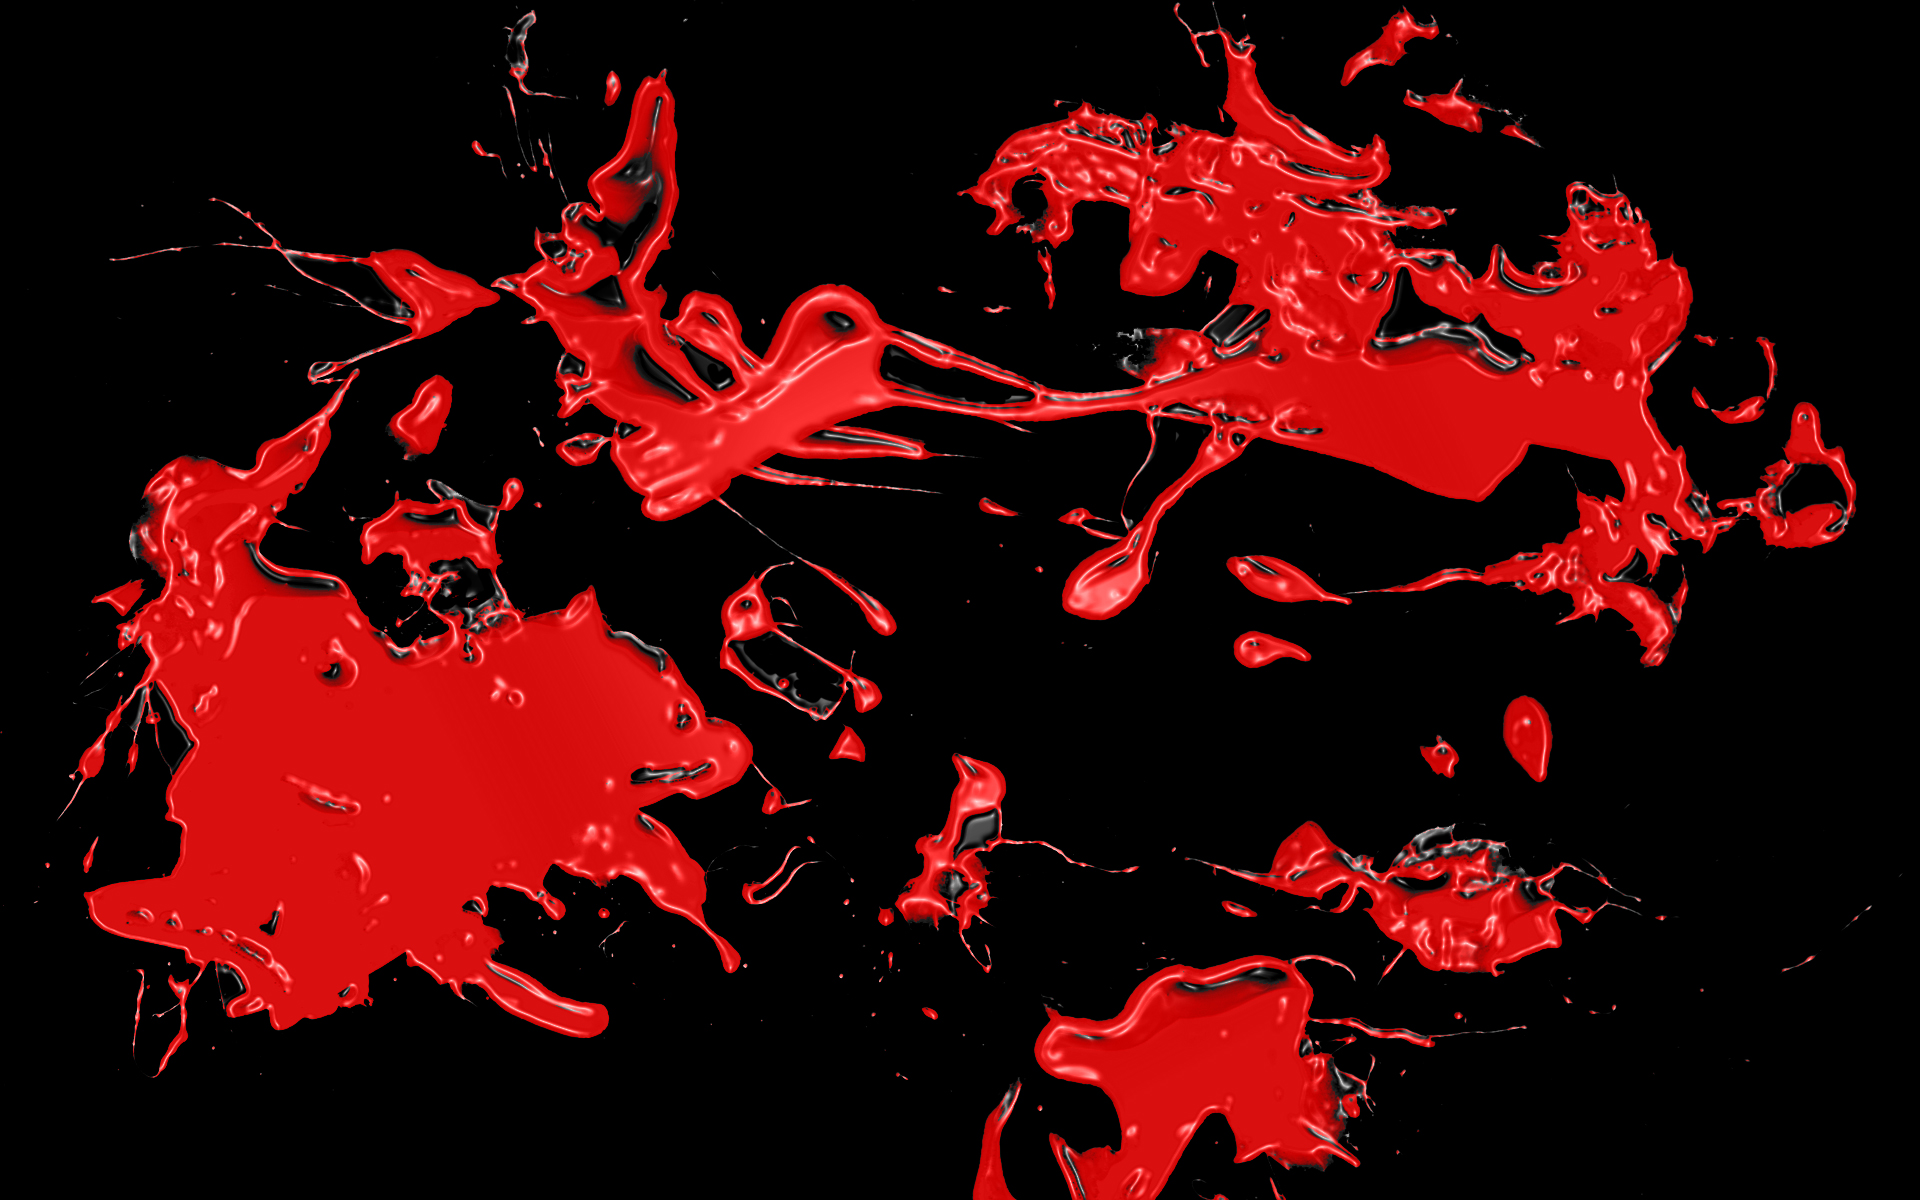 Blood Paint Red Abstract Splatter Wallpaper - Resolution:1920x1200 - ID:453...